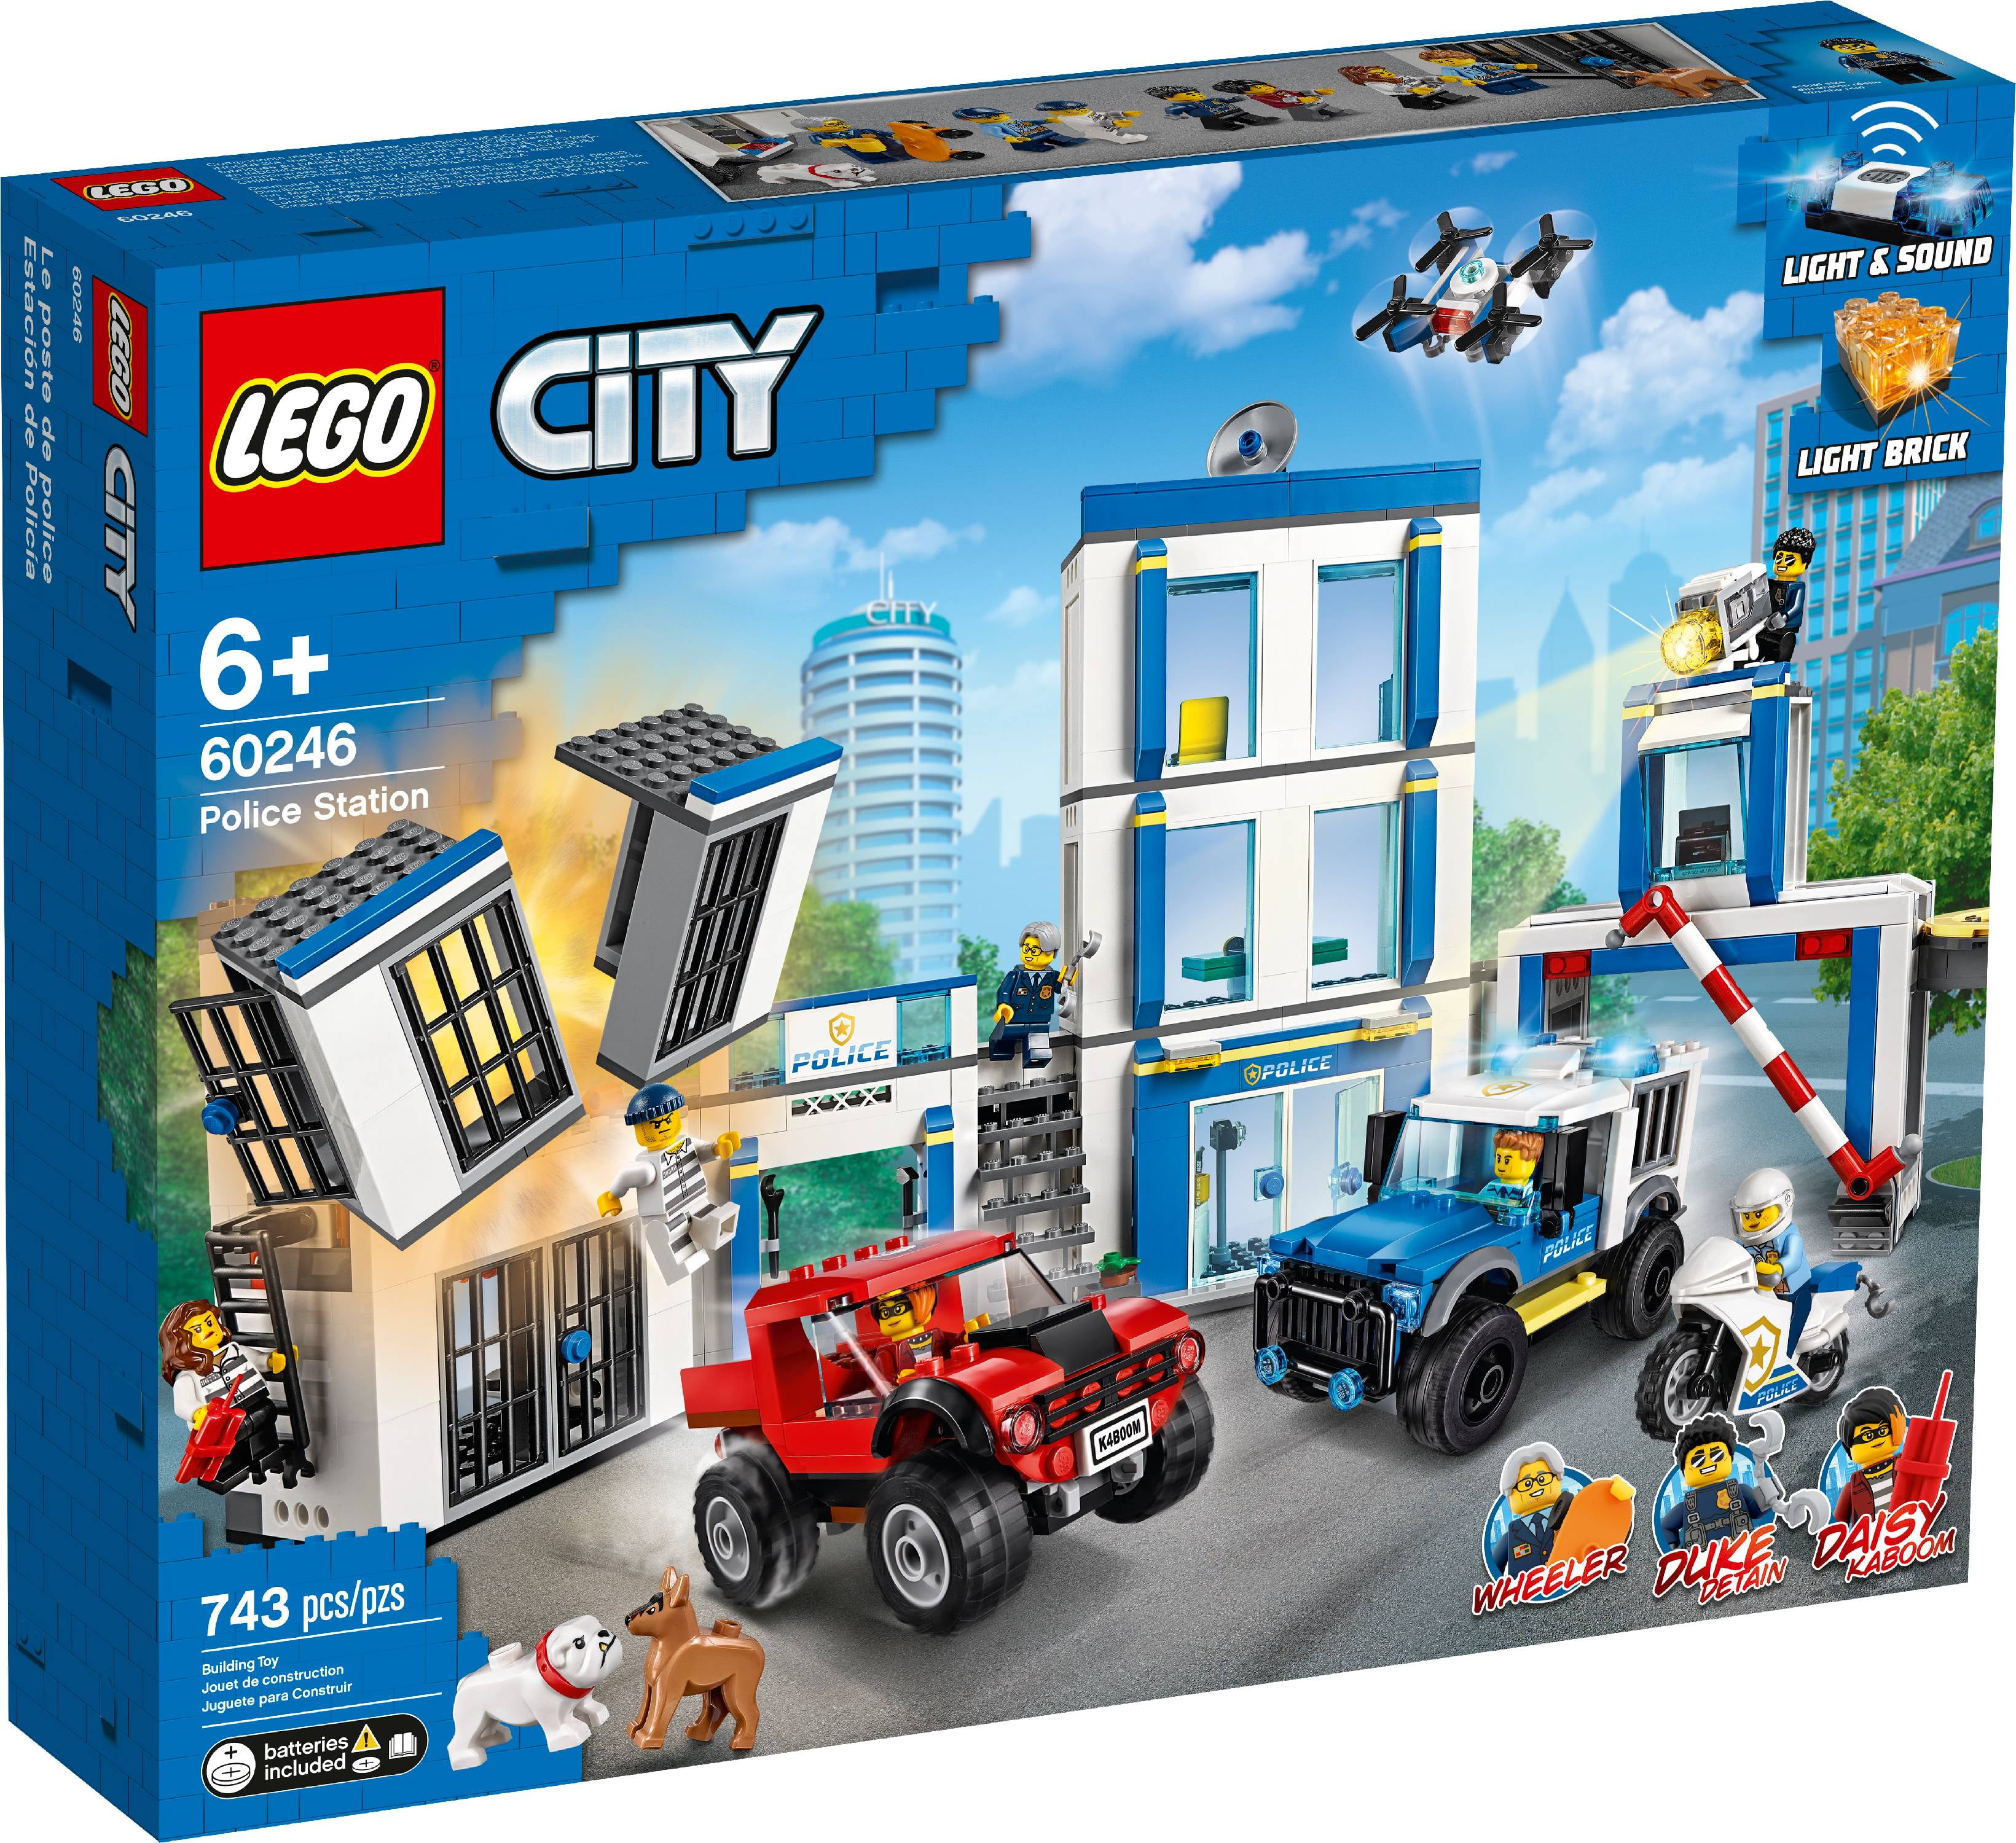 fløjte Vellykket fysiker LEGO City 60246 Toy Police Station Block Building Set Playset with 7  Minifigures - Walmart.com